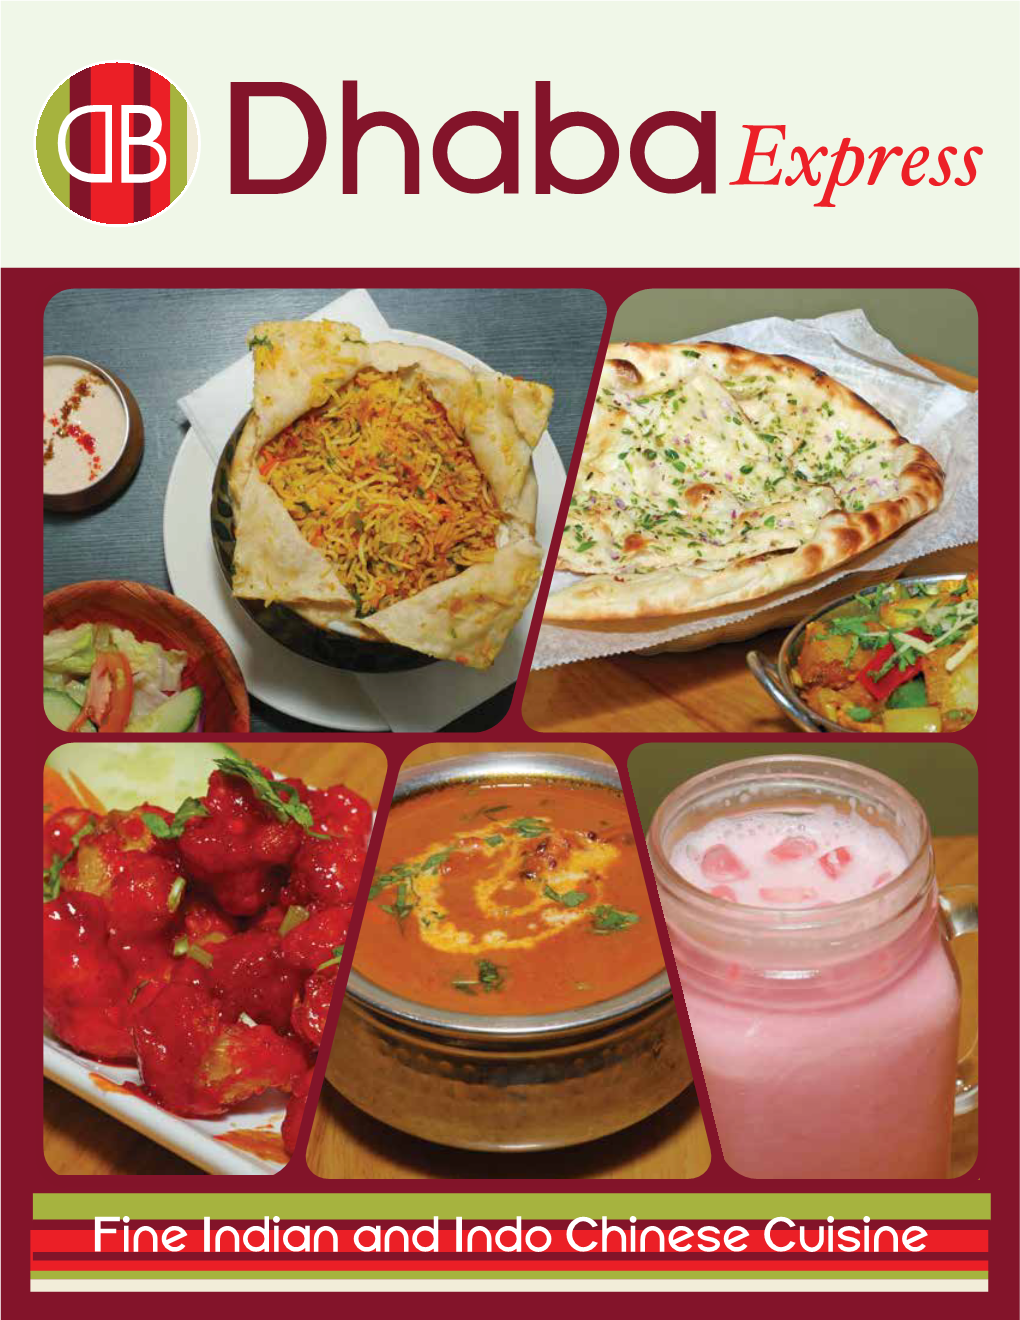 Dhaba Express Menu